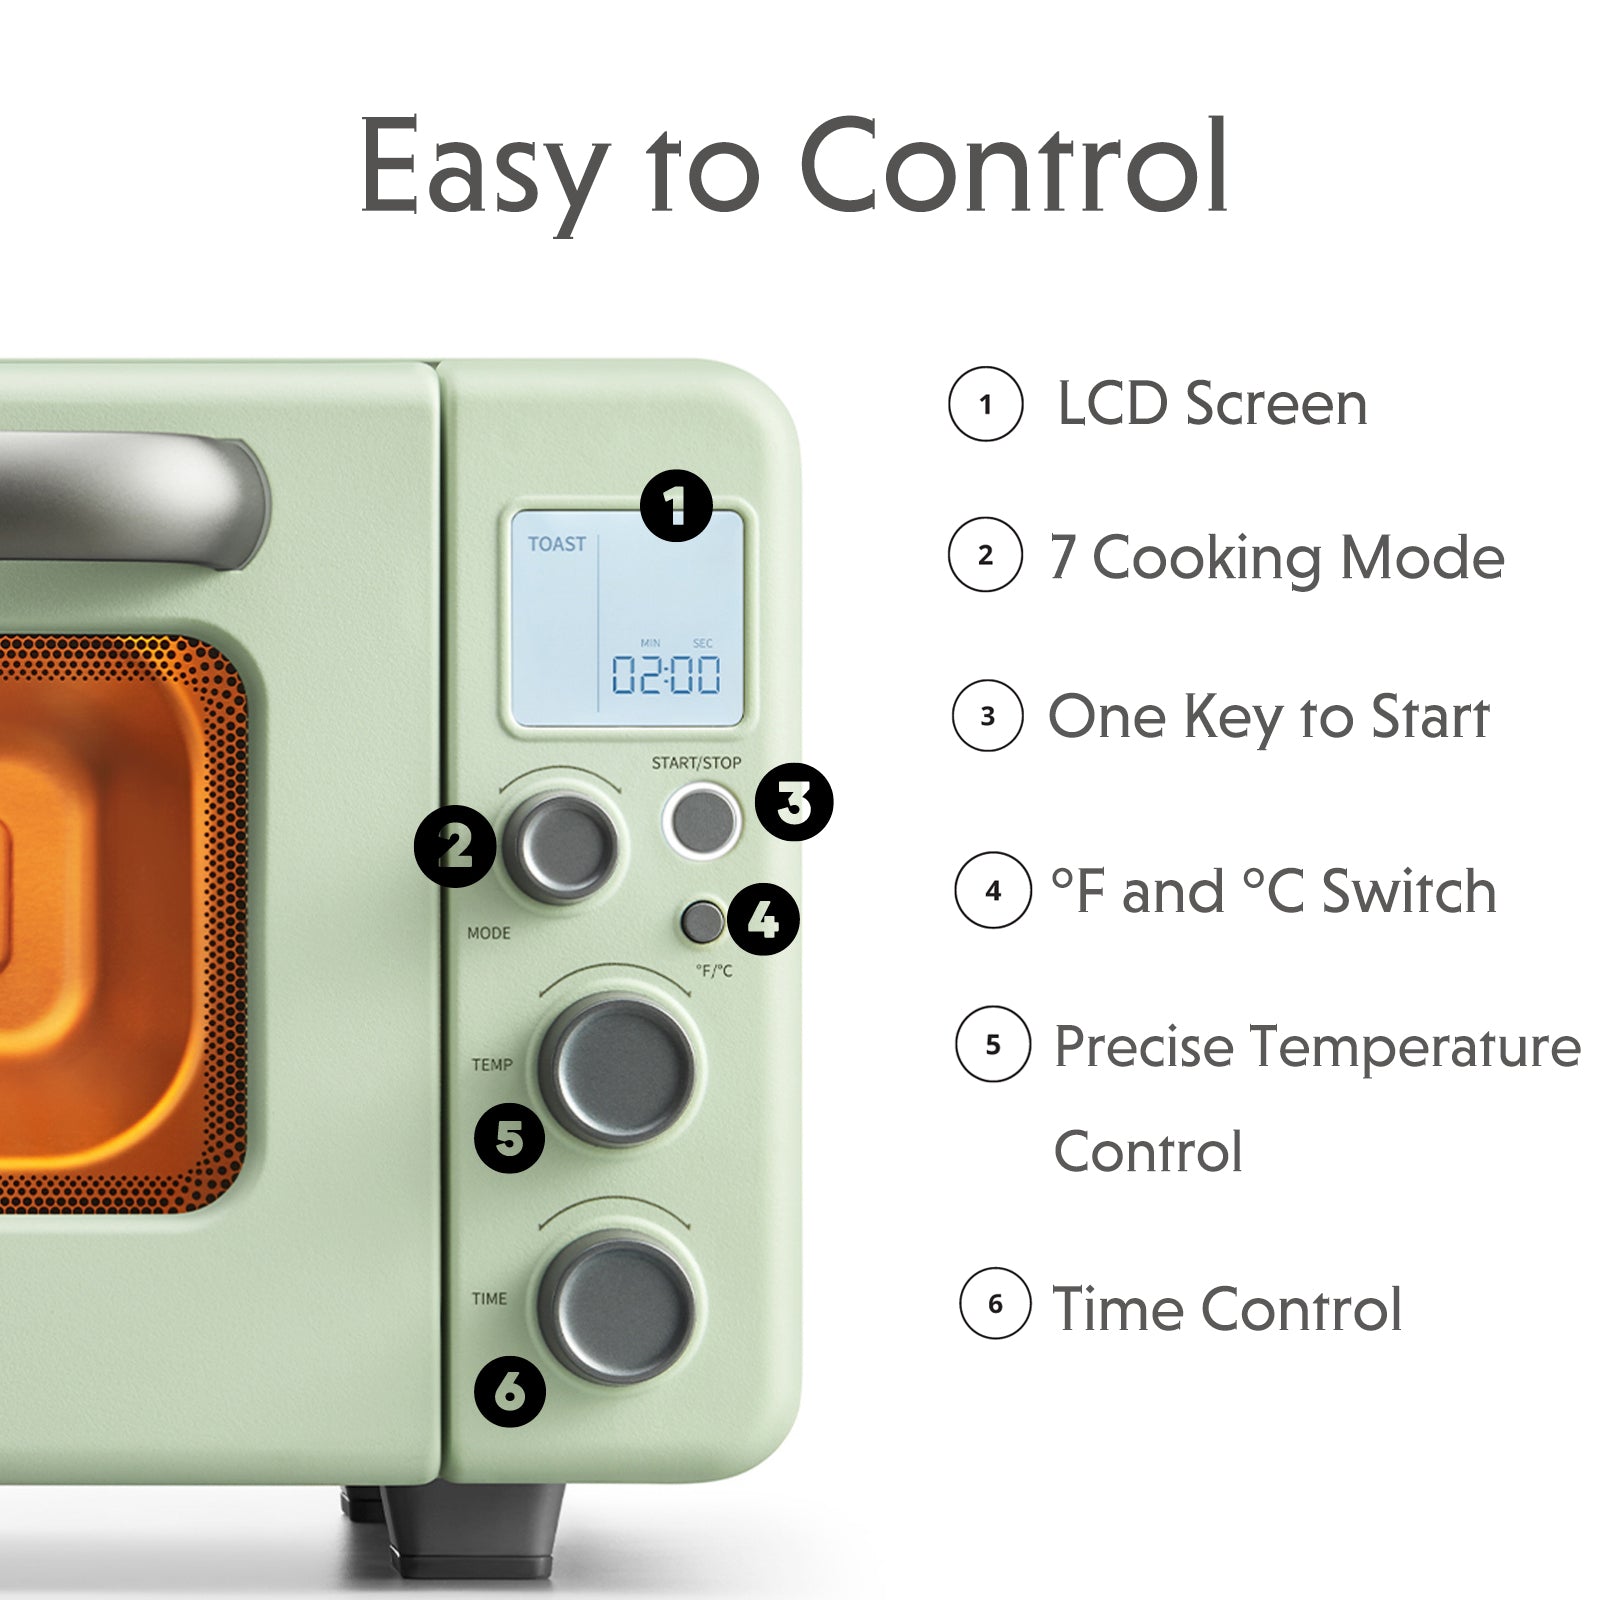 Buydeem Toaster Oven Buydeem Color: Cozy Greenish